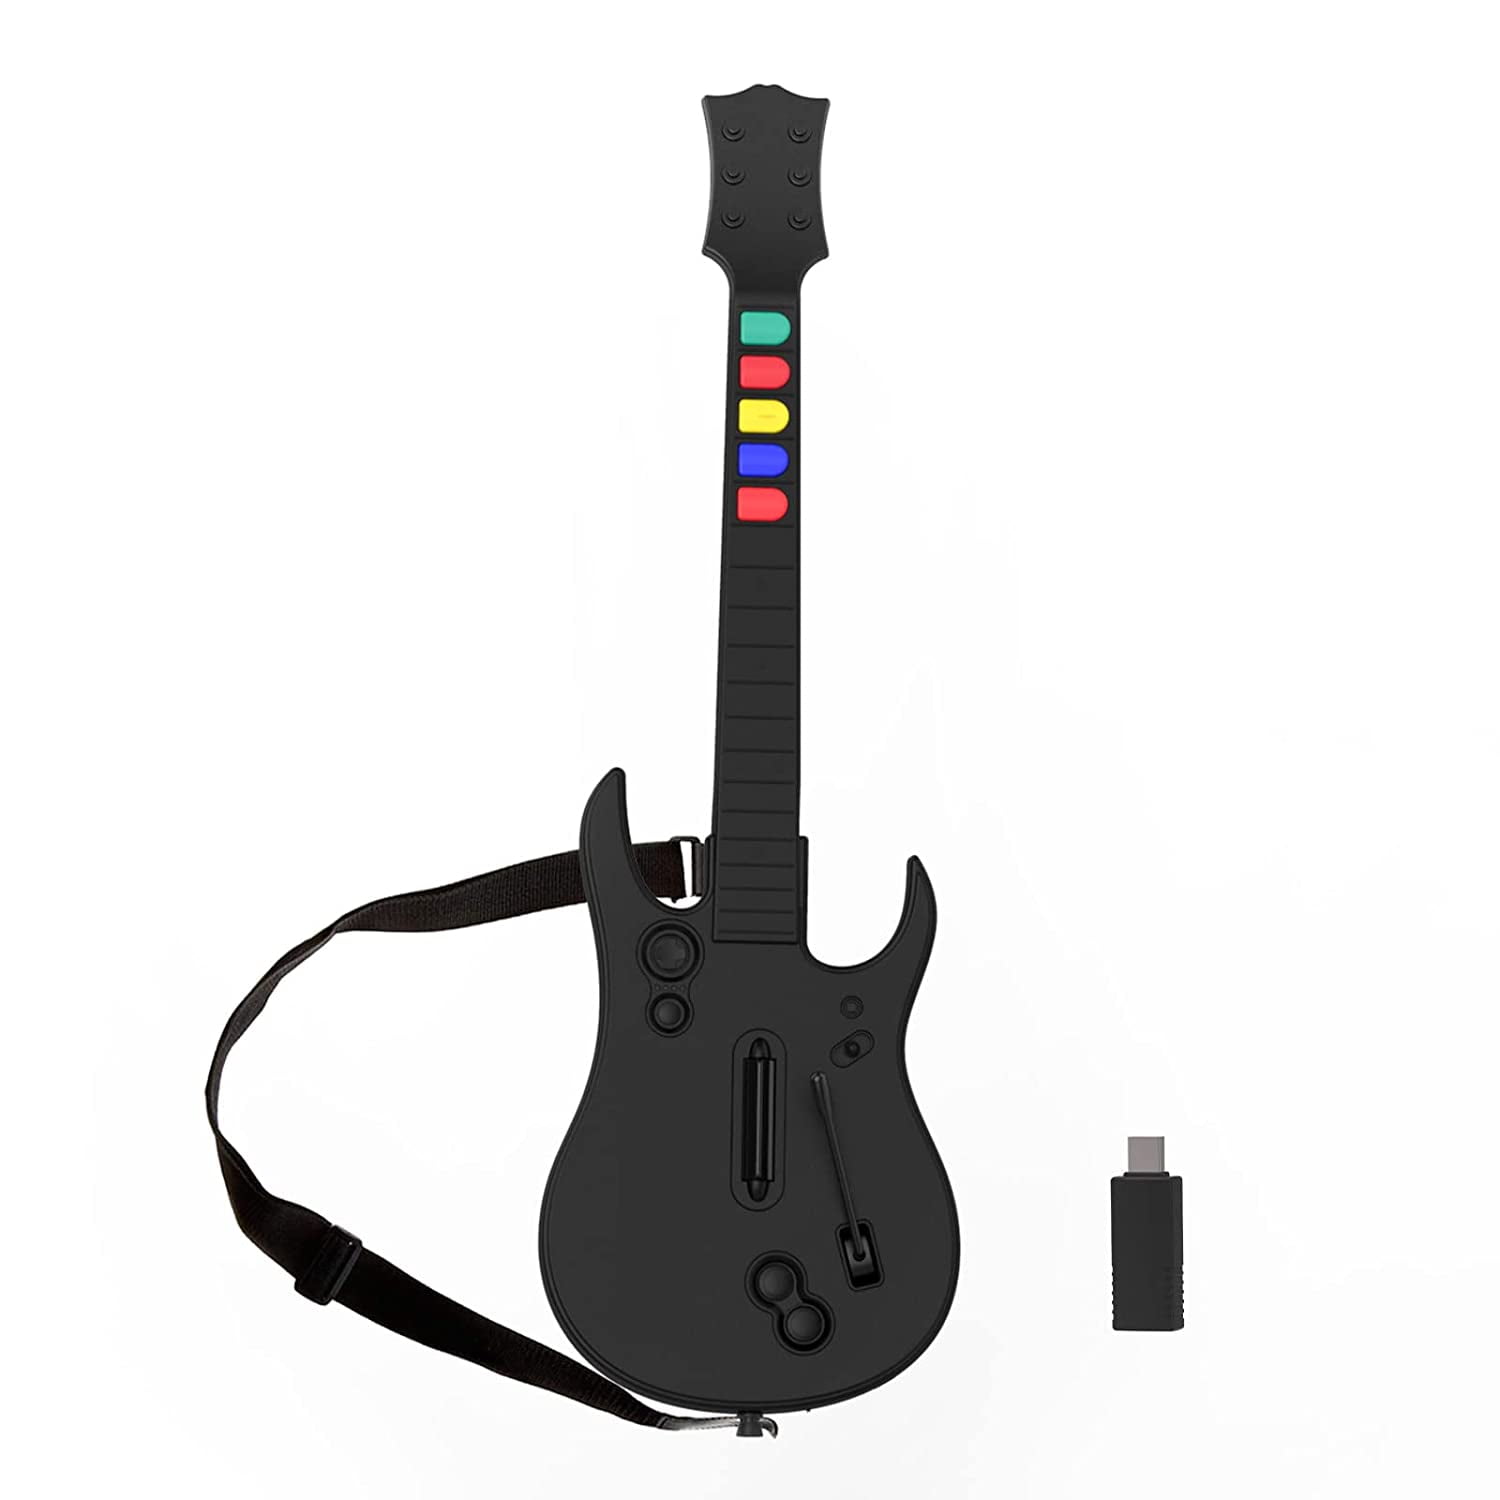 Guitar Controller PC, Wireless PlayStation 3 PS3 /PC Guitar Hero Guitar with Dongle for Clone Hero, Guitar Hero 3/4/5 Rock Band 1/2 Black - Walmart.com